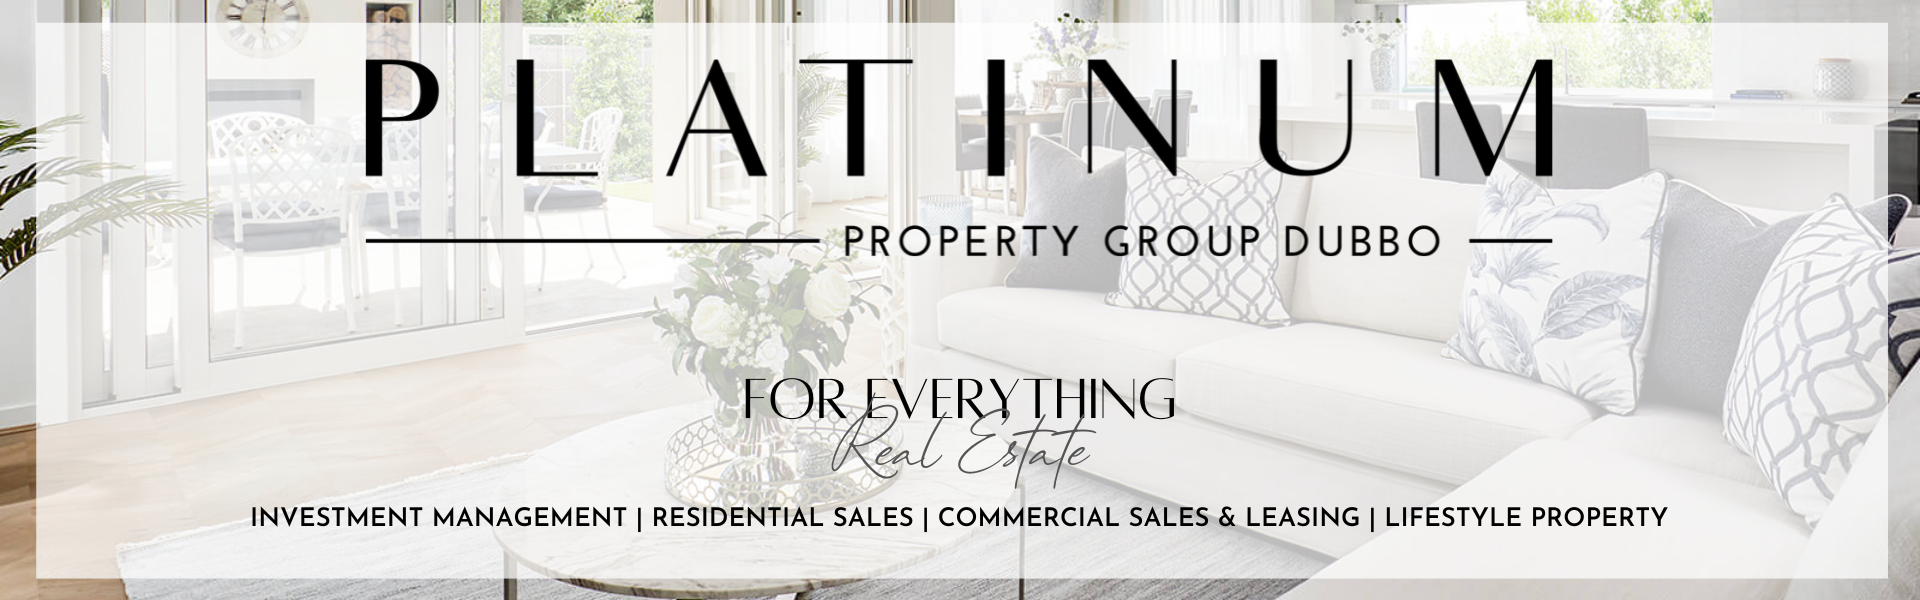 Platinum Property Group - Dubbo